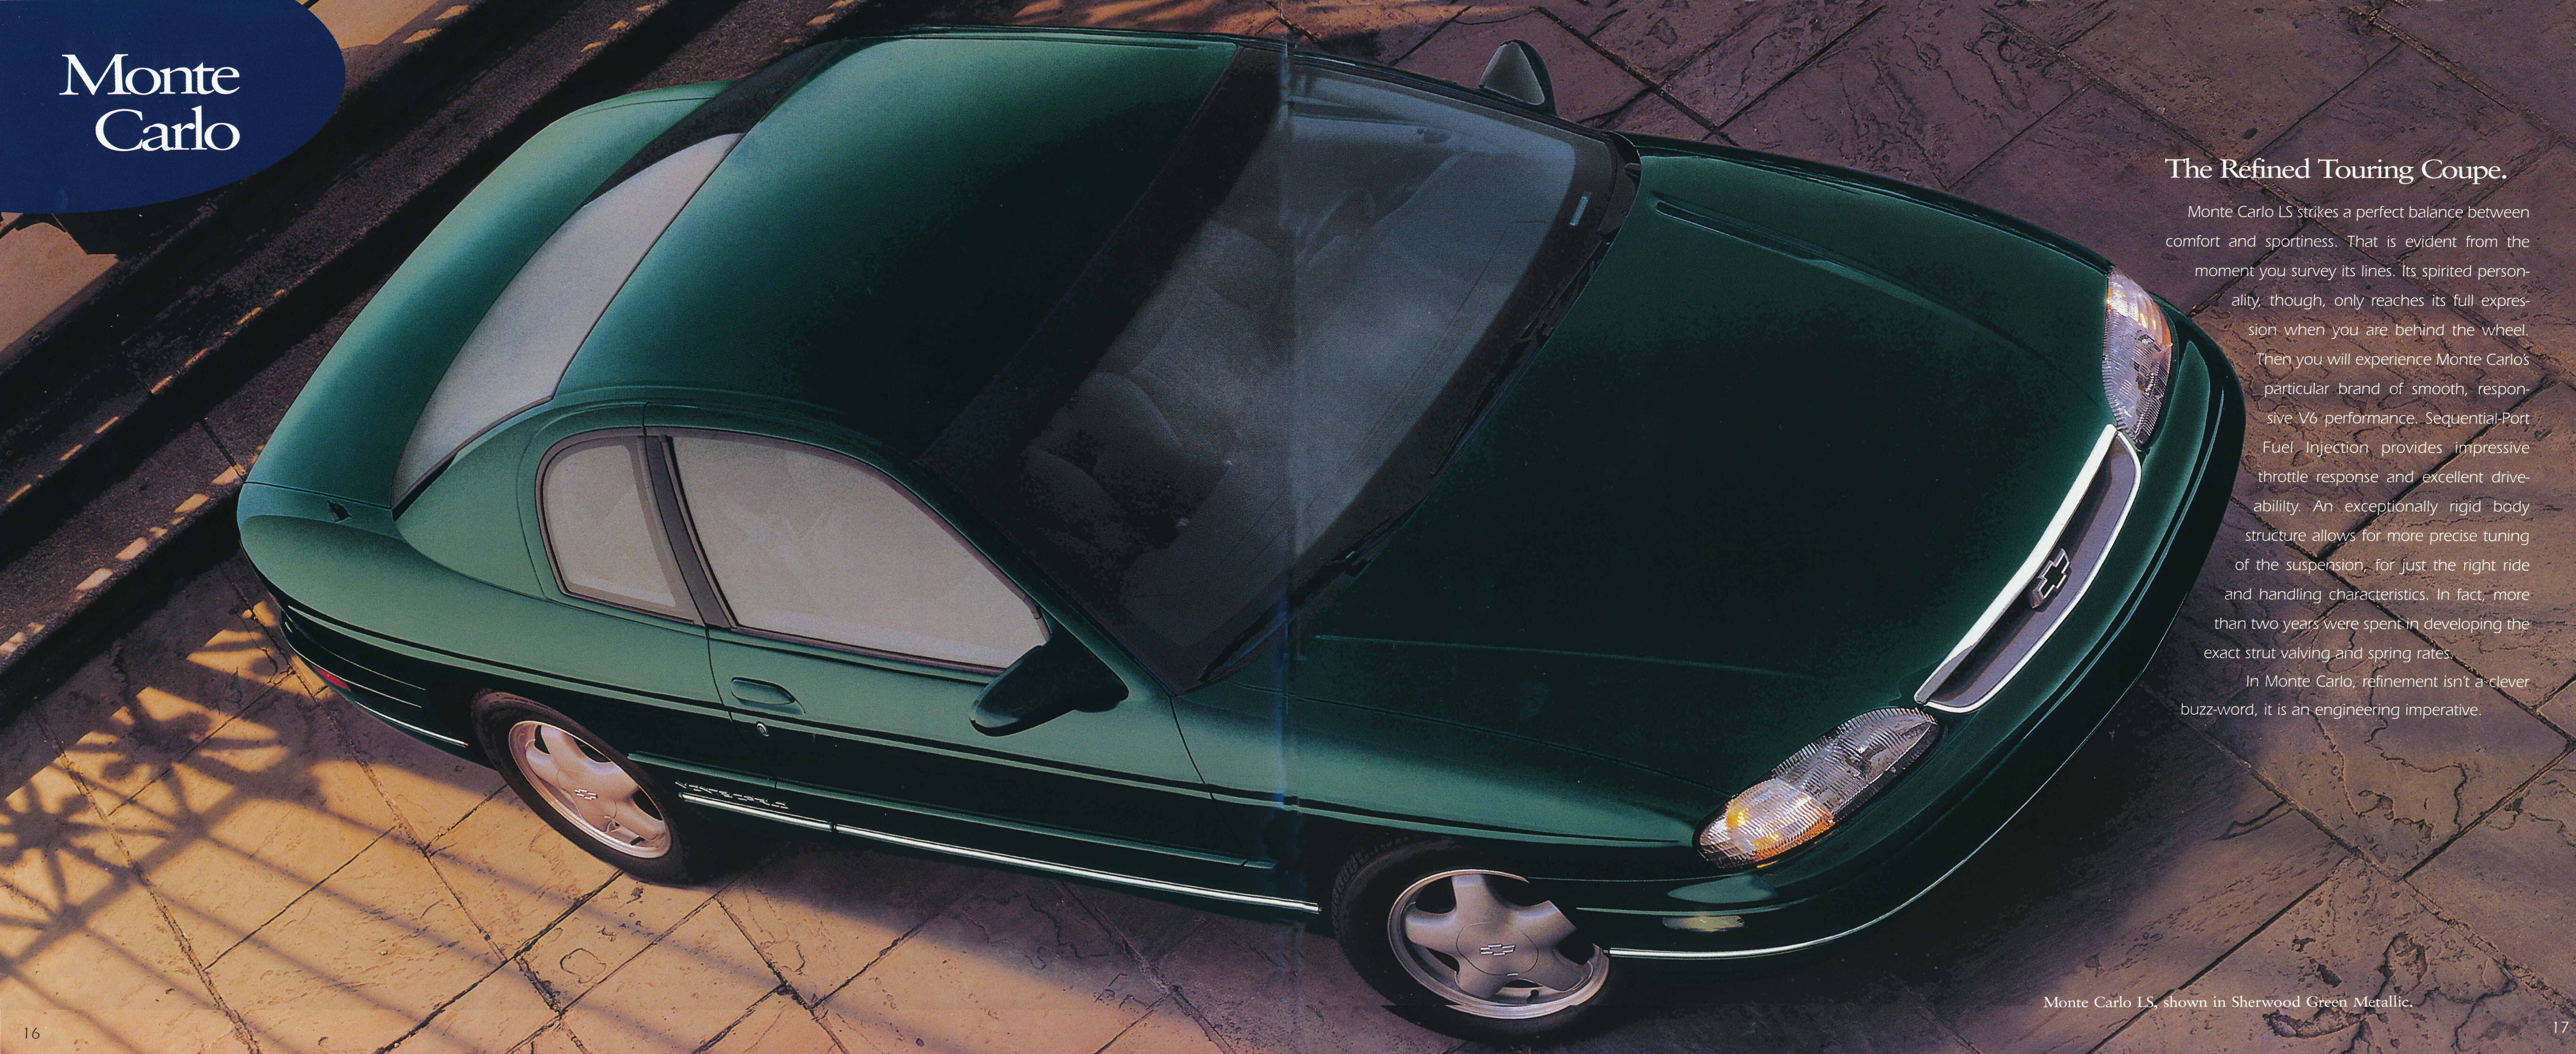 1996_Chevrolet_Large_Cdn-16-17